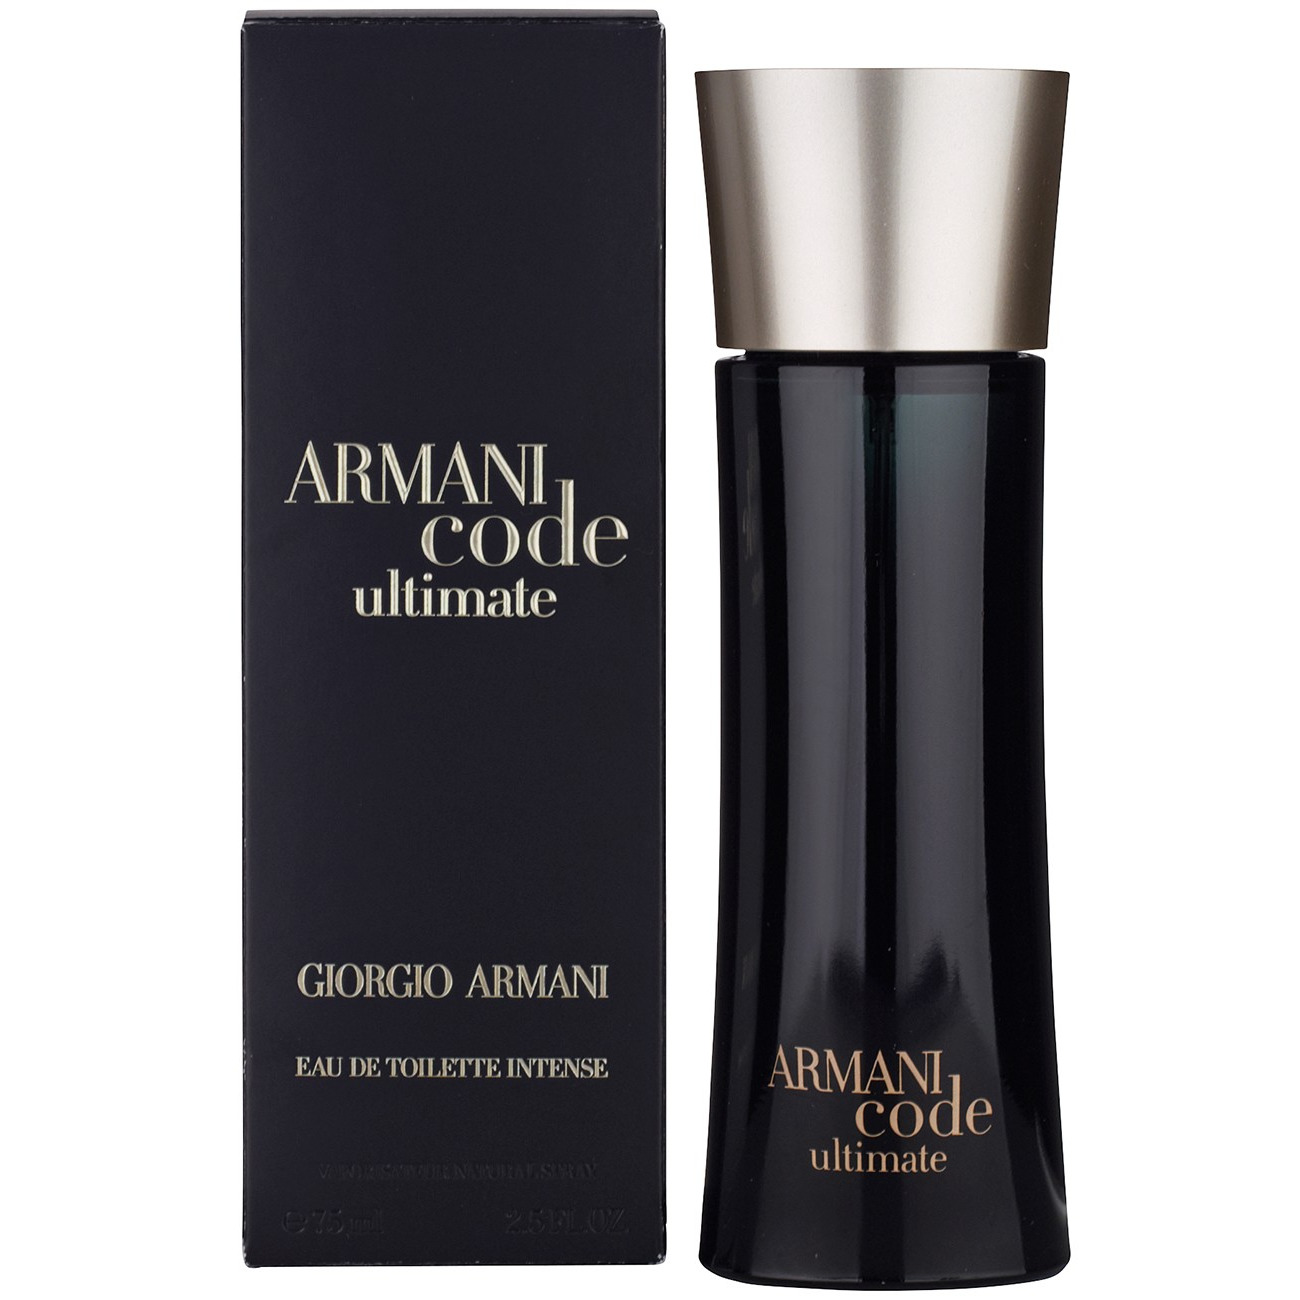 Code homme. Giorgio Armani Armani code. Духи Giorgio Armani Armani code. Armani Black code женский. Giorgio Armani code мужской Парфюм.